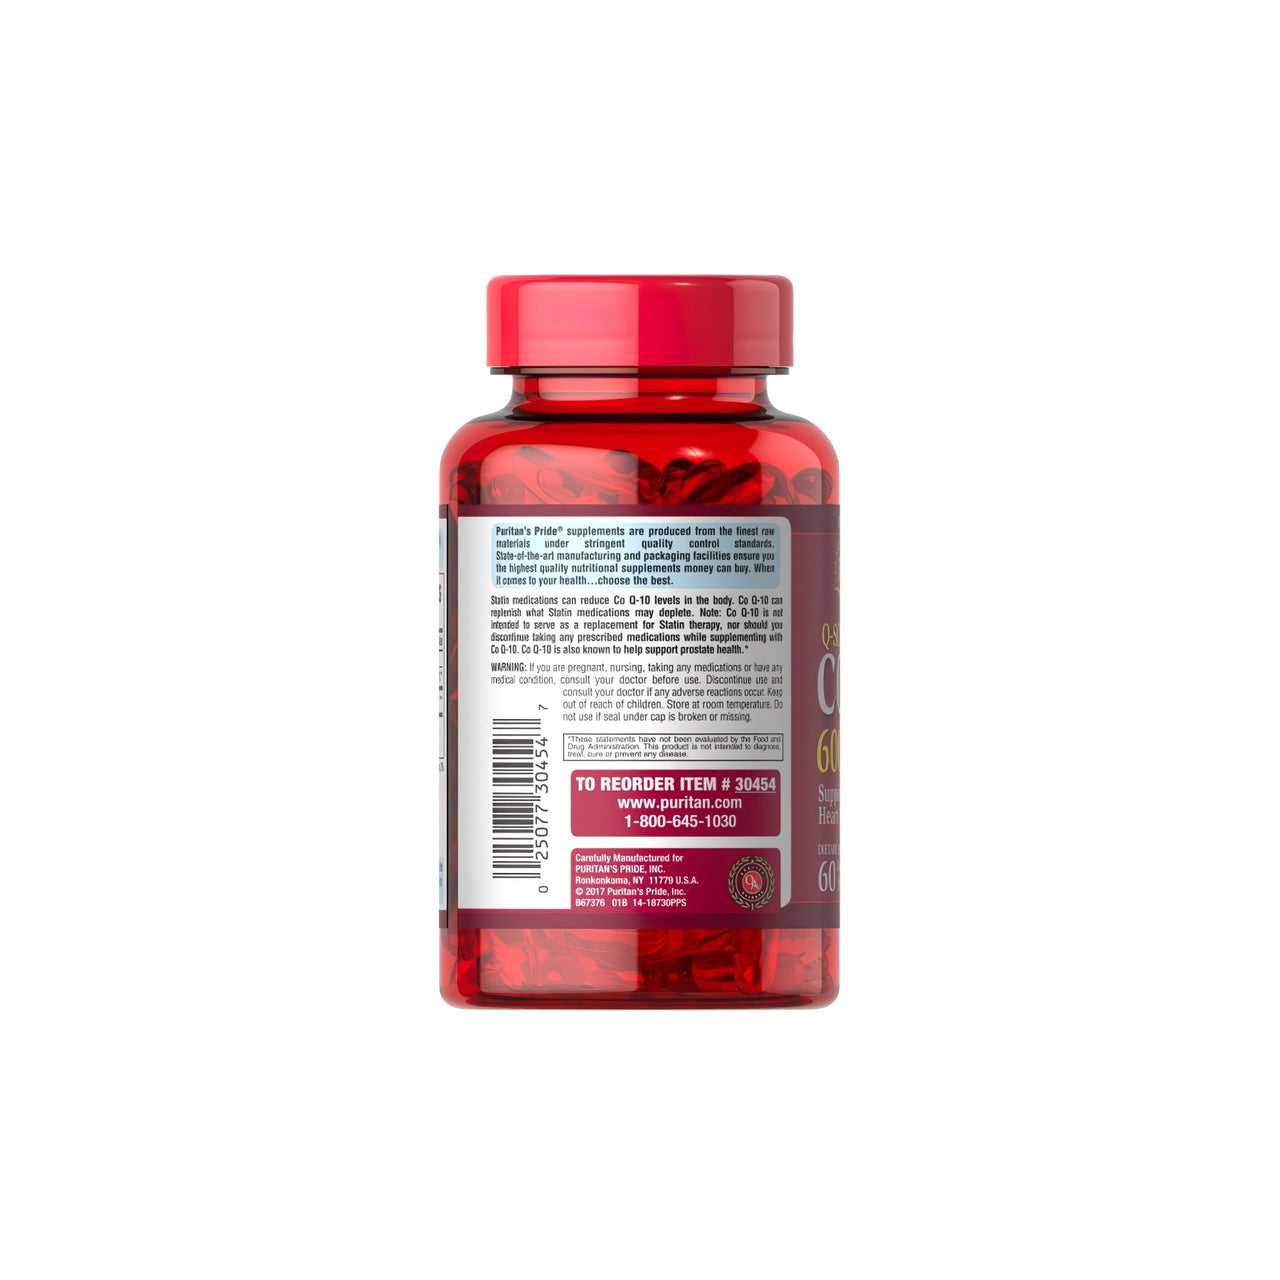 Flacone di Coenzima Q10 600 mg 60 Rapid Release Softgels Q-SORB™ di Puritan's Pride su sfondo bianco.